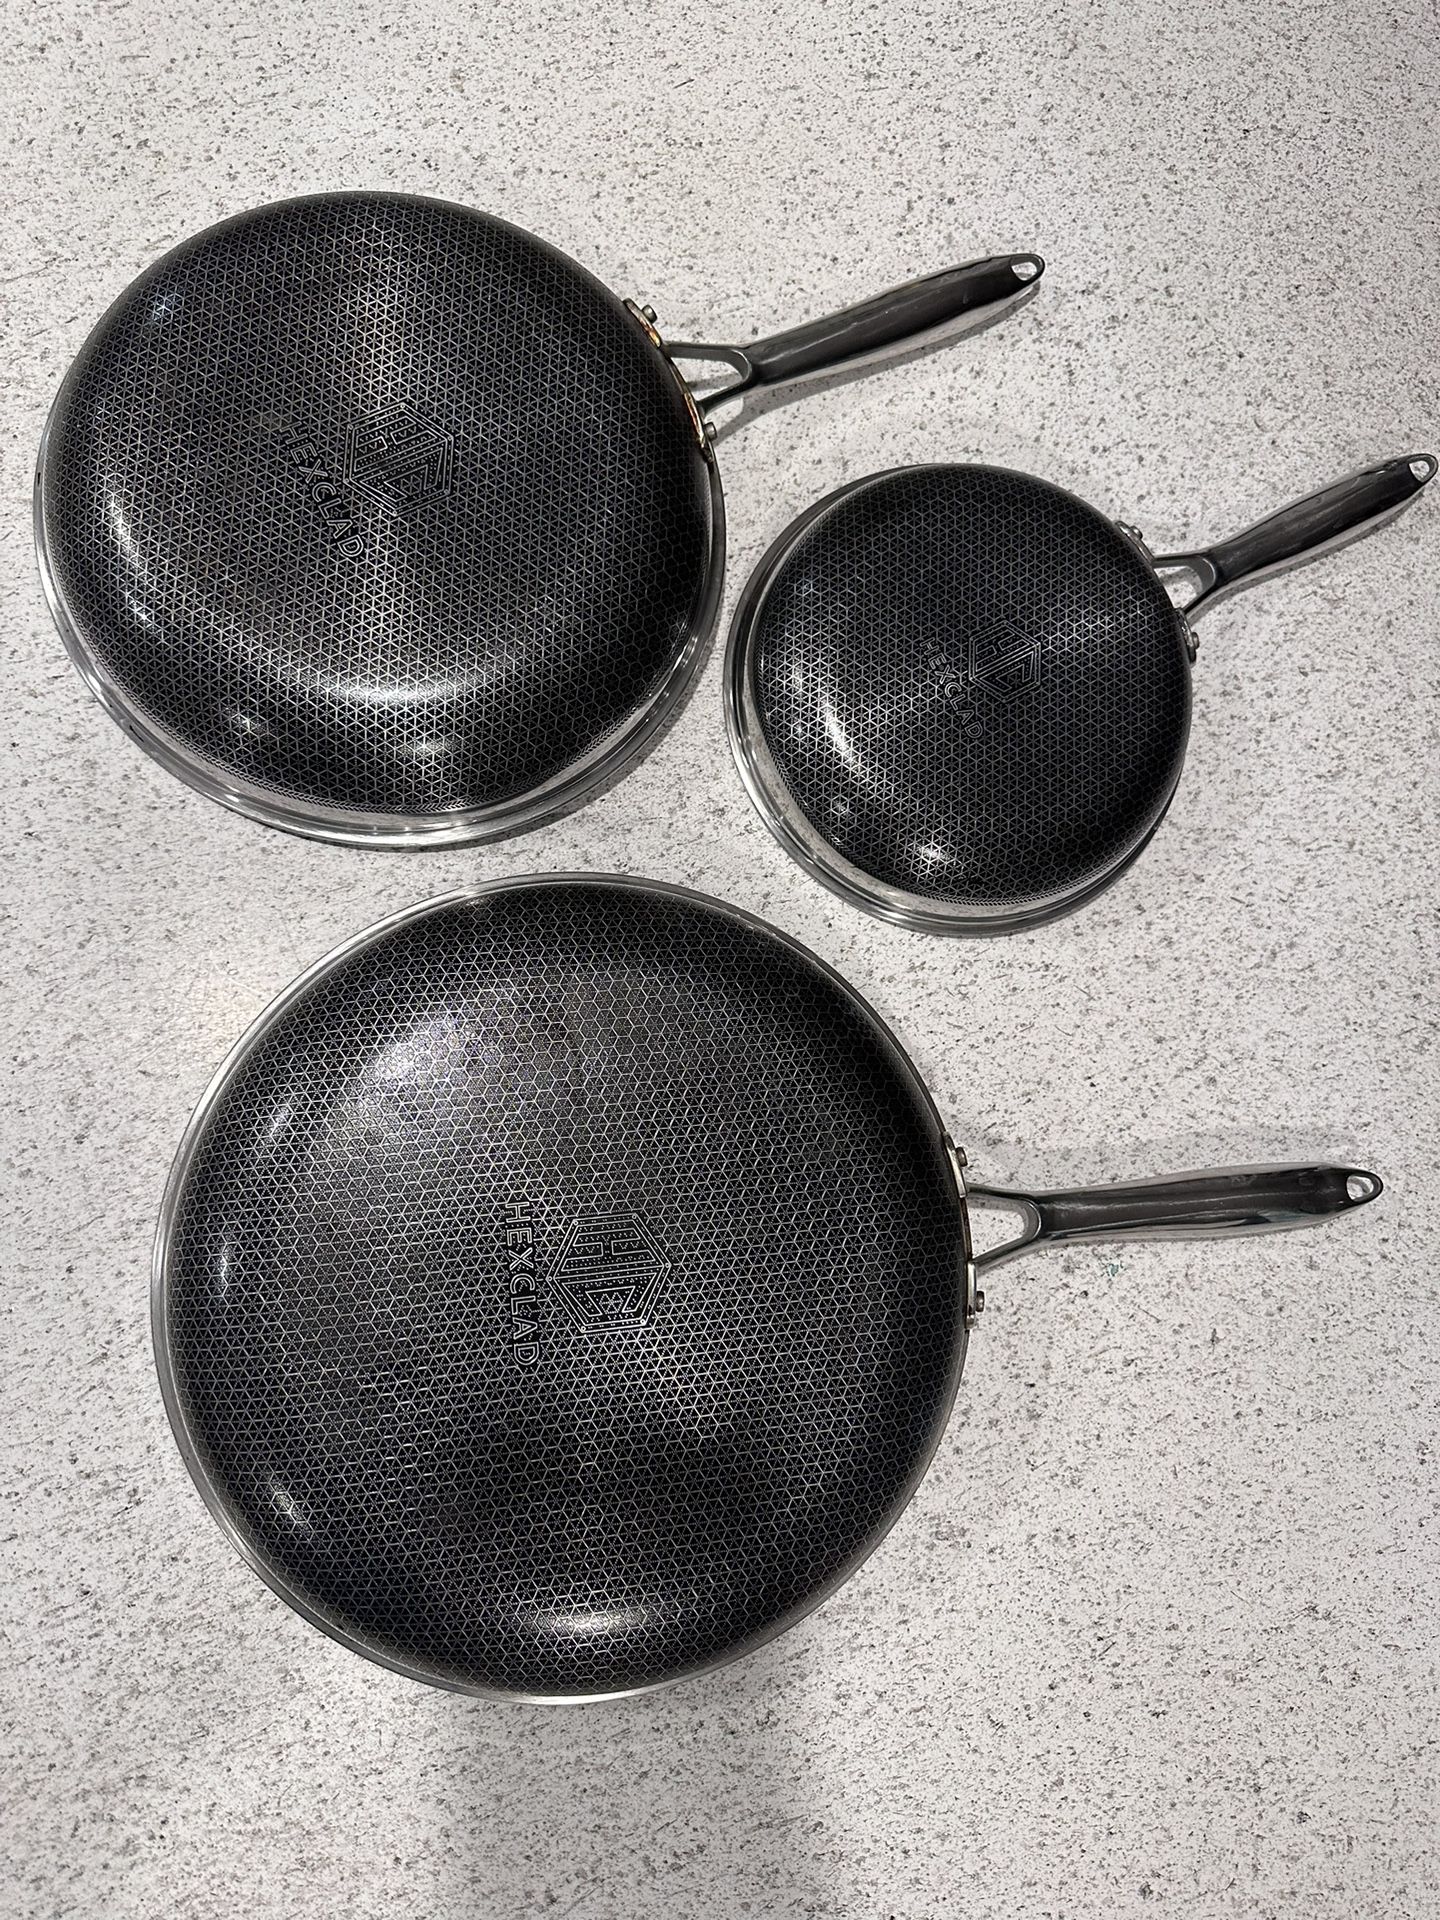 Hexclad pans for Sale in Woodland Hills, CA - OfferUp